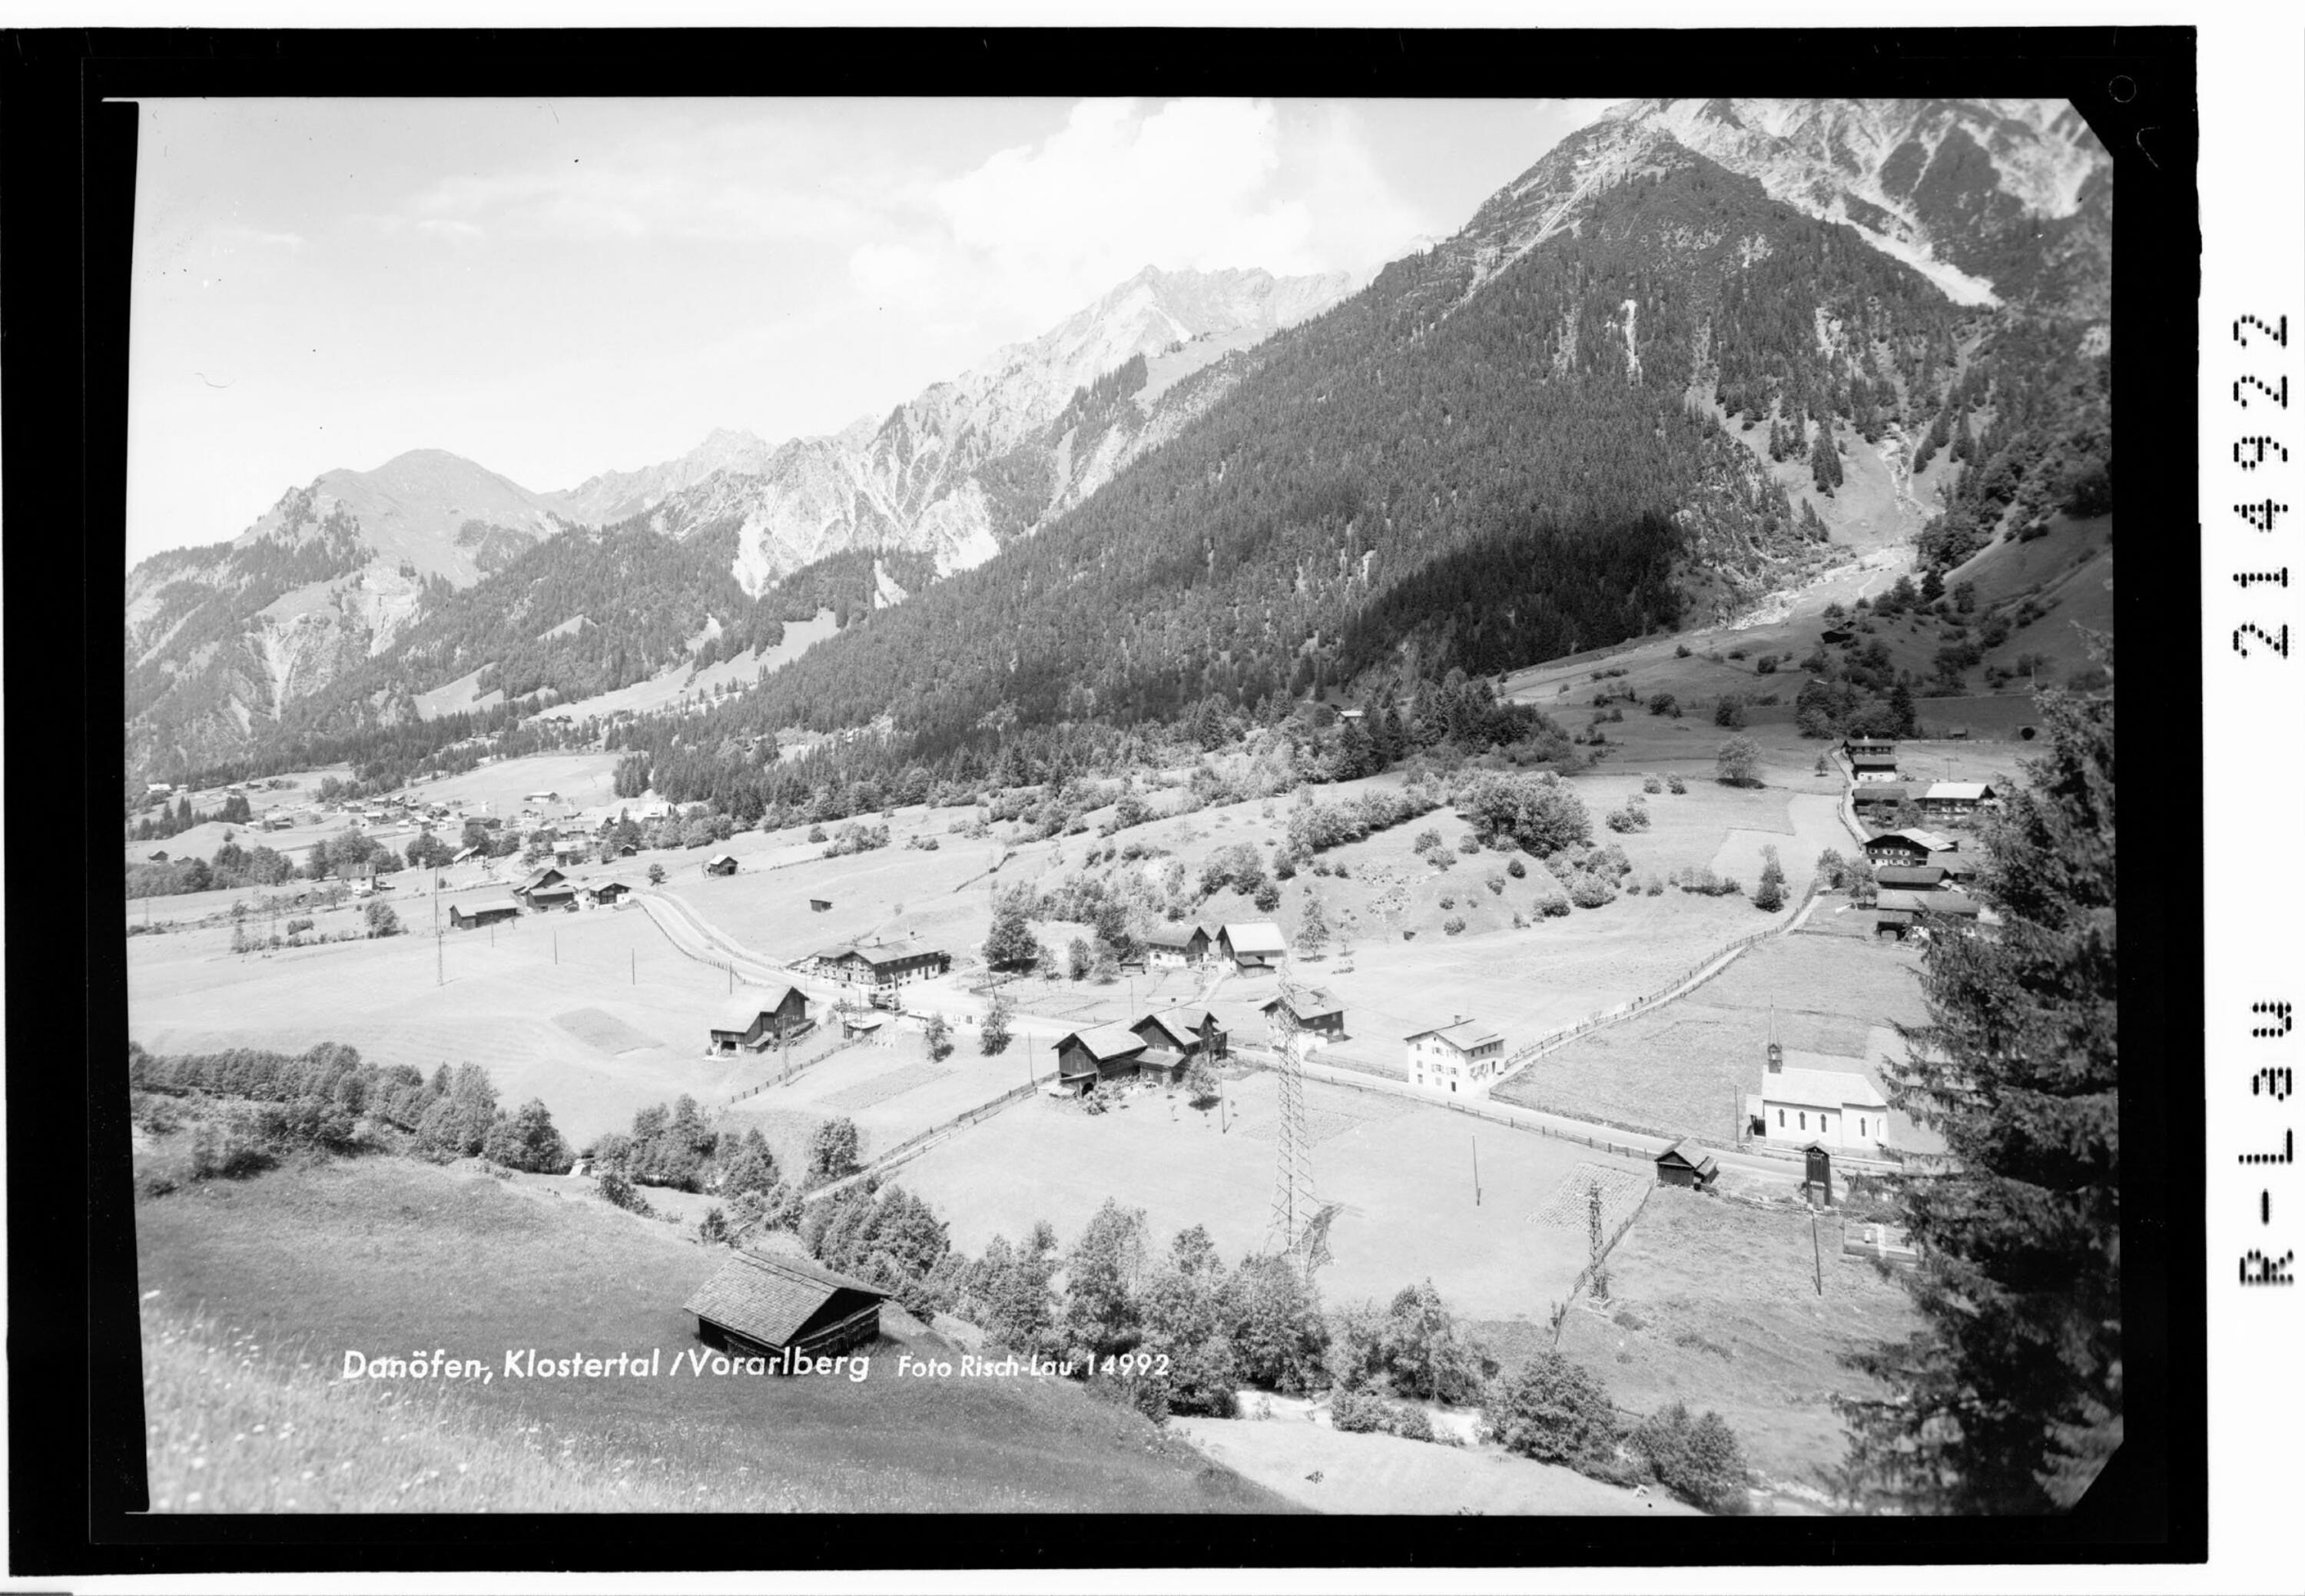 Danöfen, Klostertal / Vorarlberg></div>


    <hr>
    <div class=